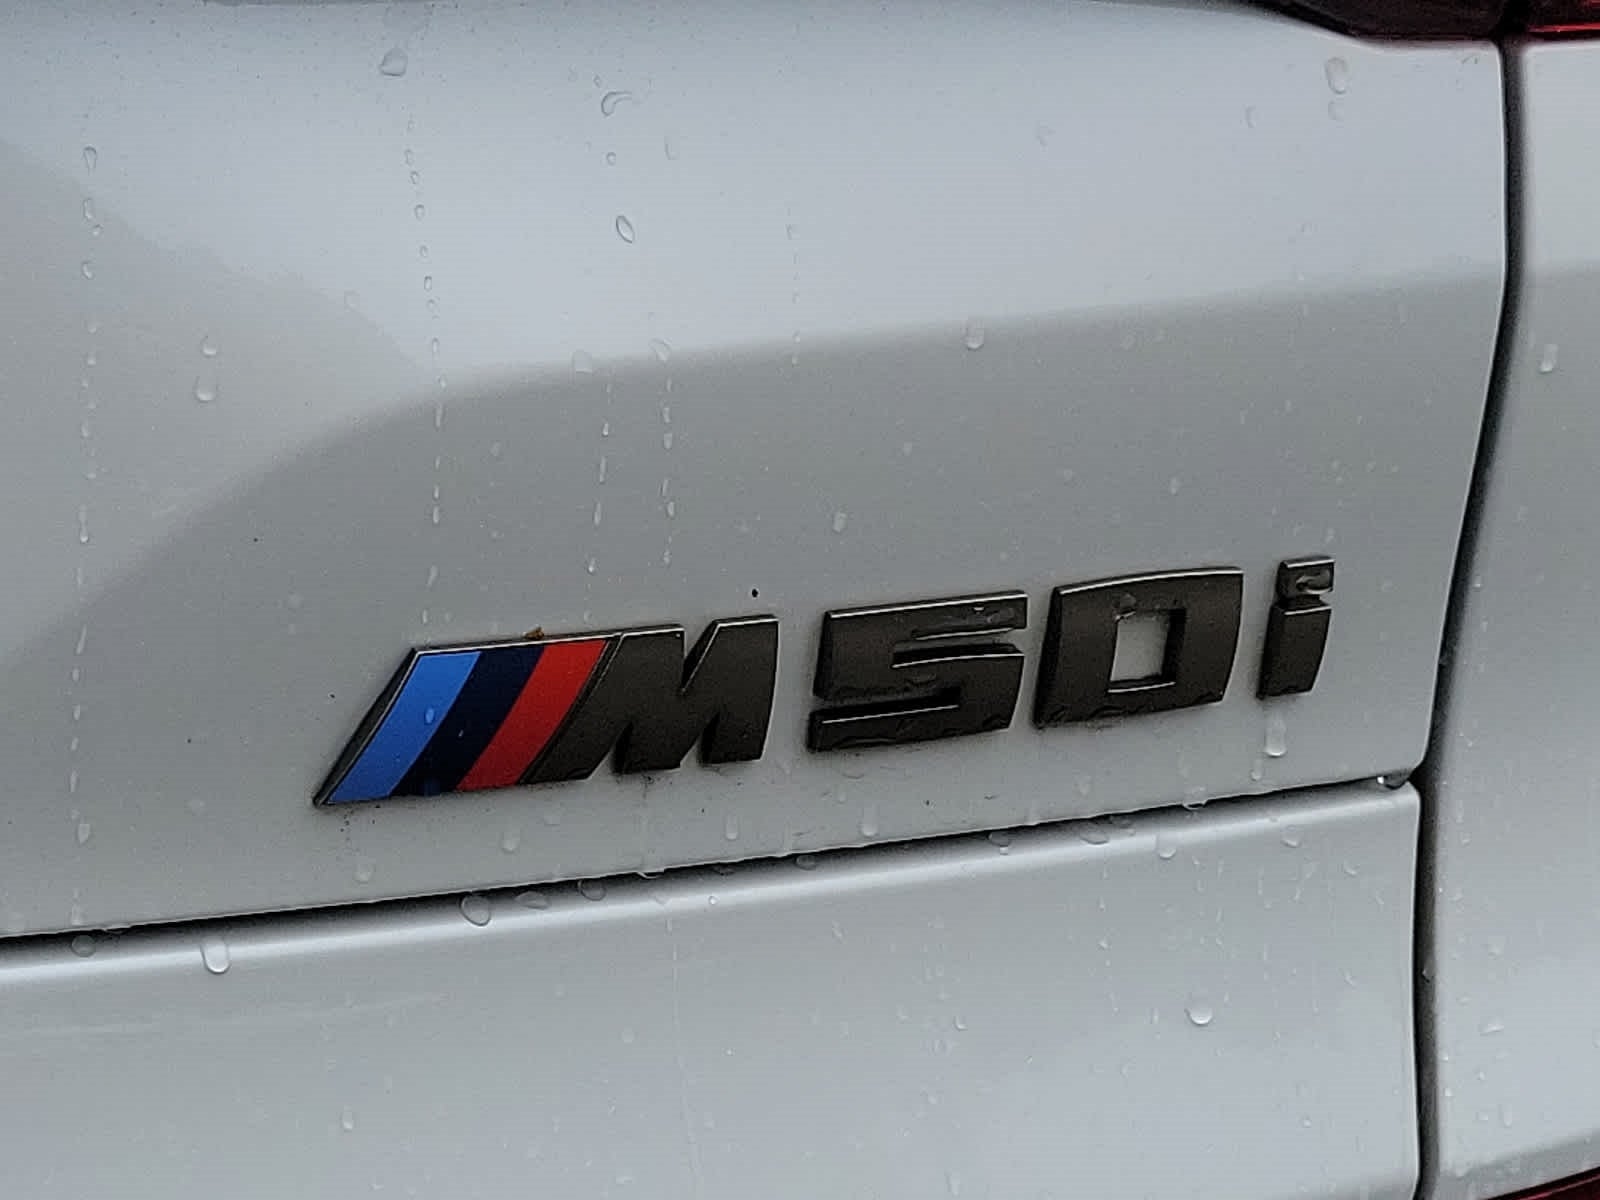 2021 BMW X5 M50i Sports Activity Vehicle